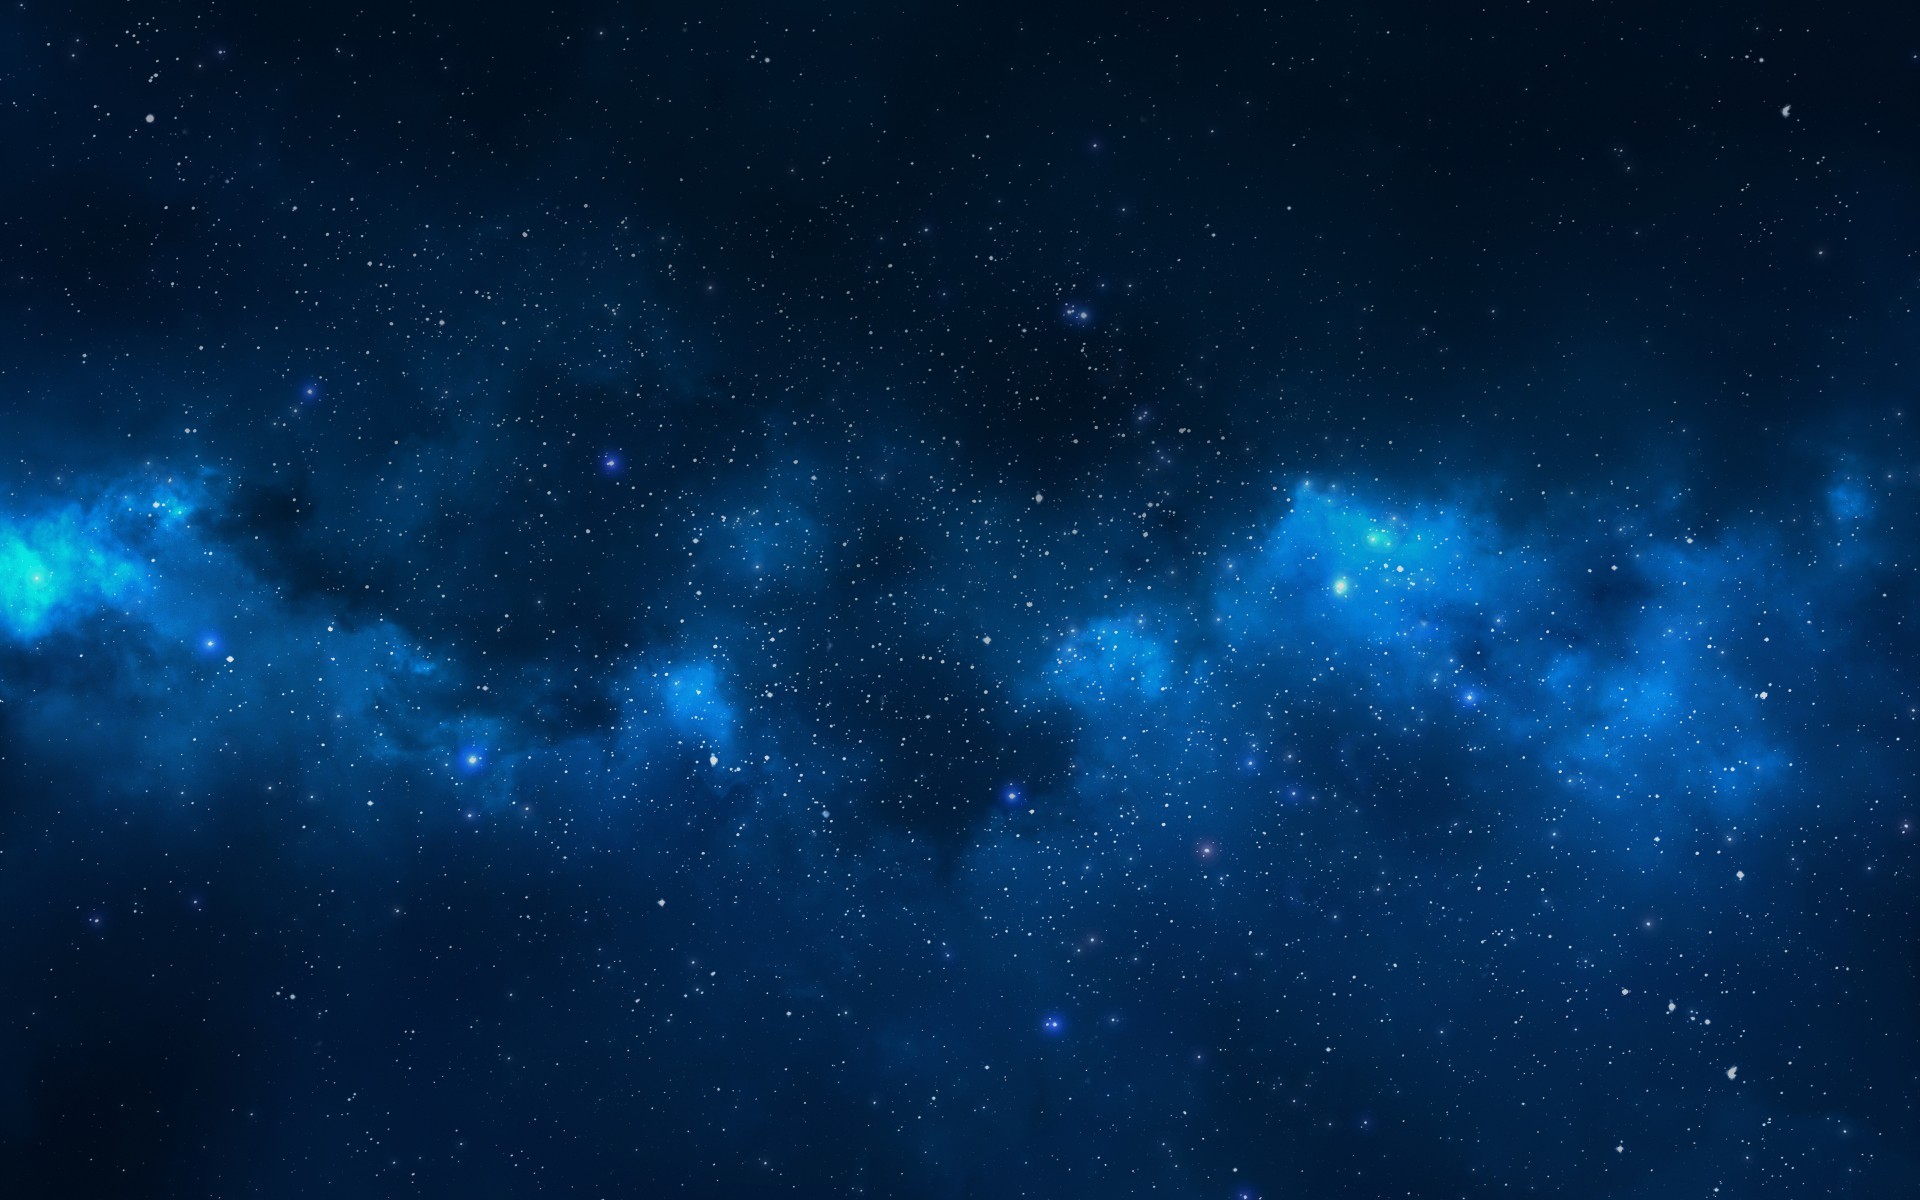 Nebula Night Sky  Pics About Space image